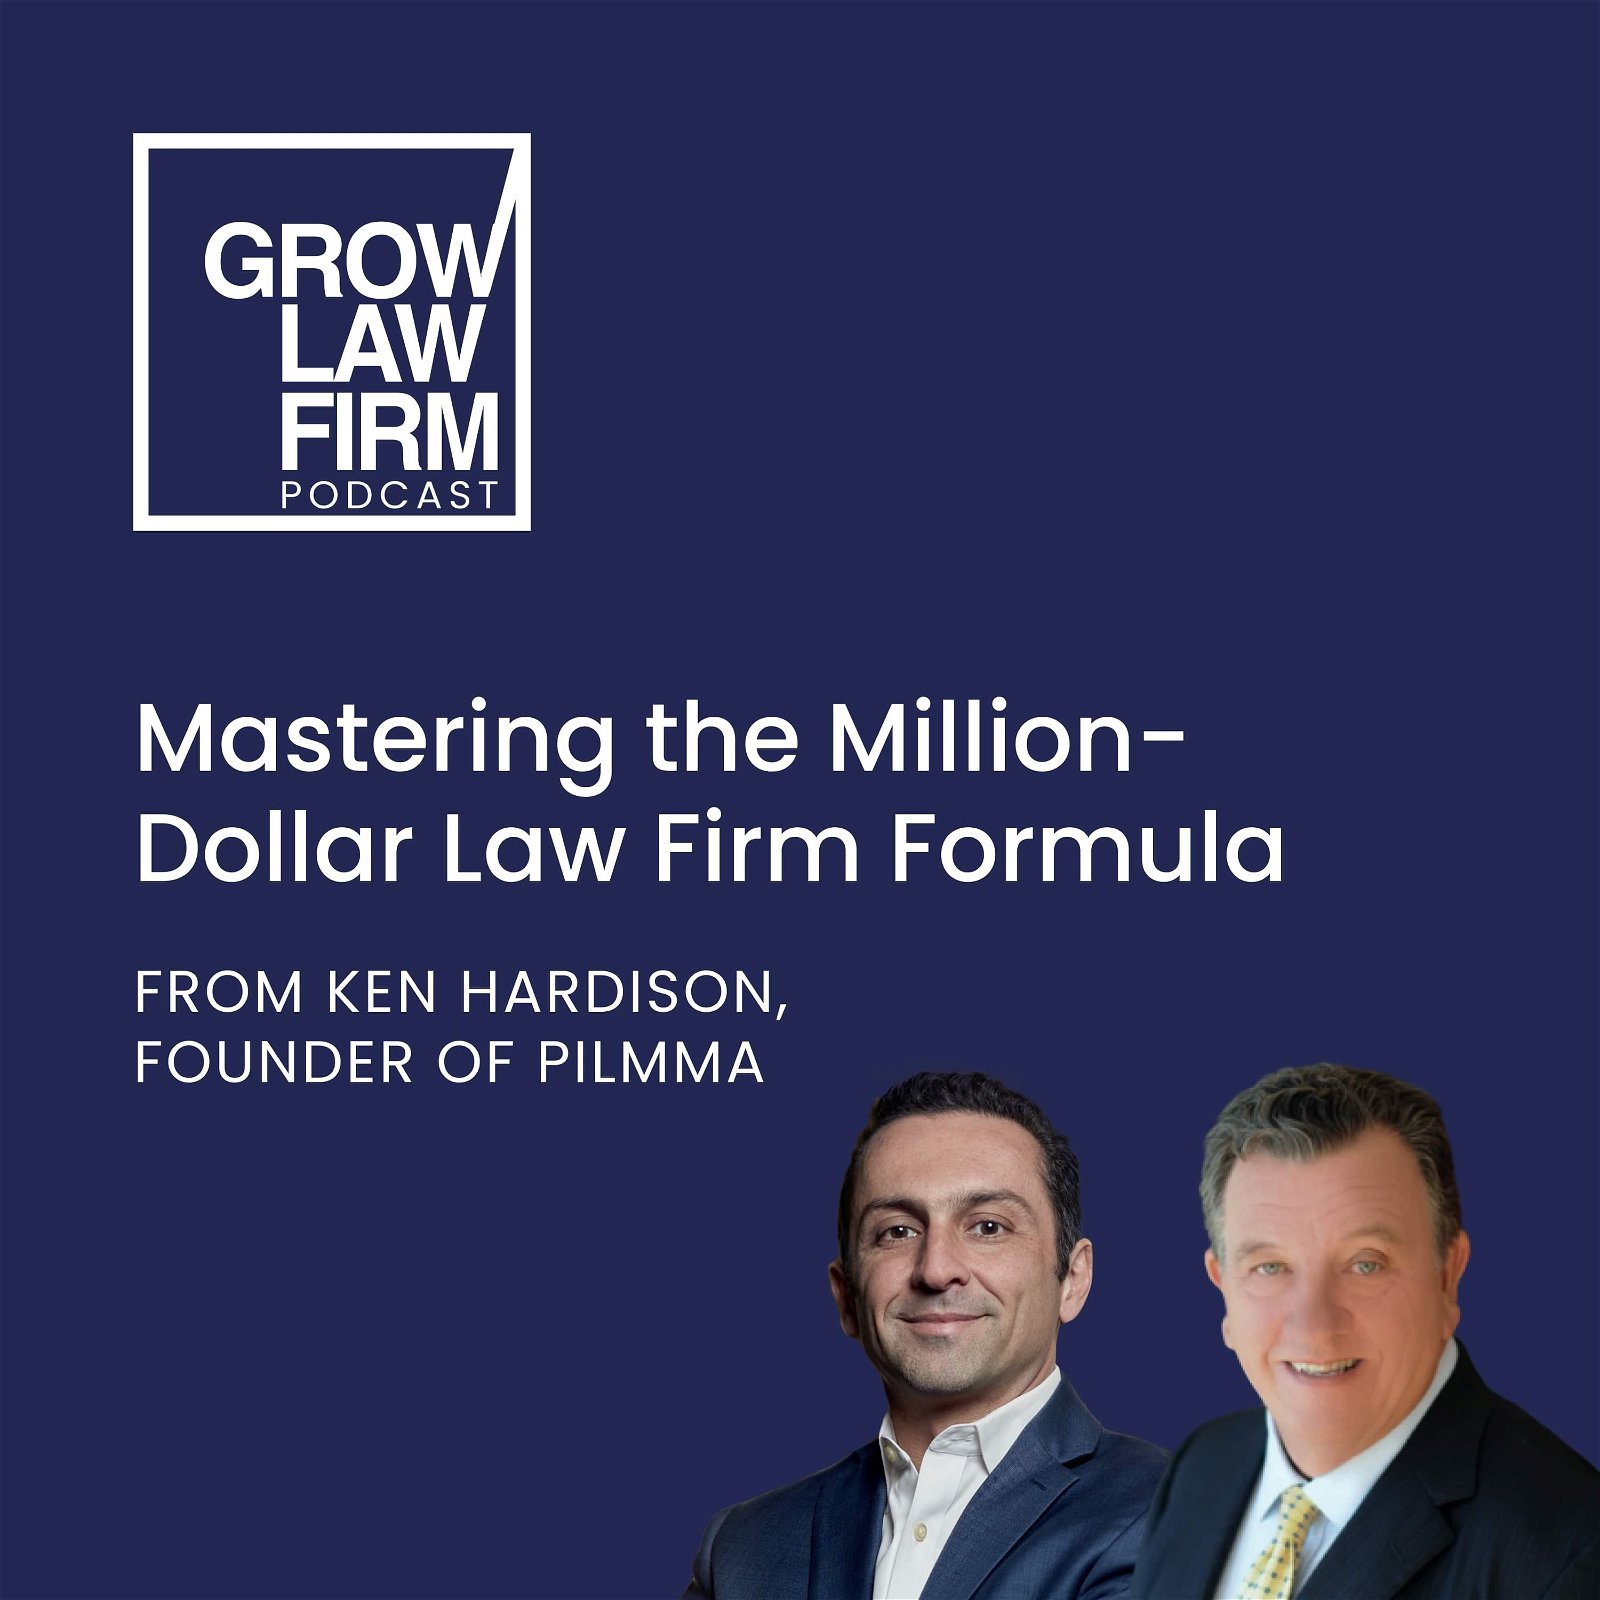 Mastering the Million-Dollar Law Firm Formula from Ken Hardison, Founder of PILMMA